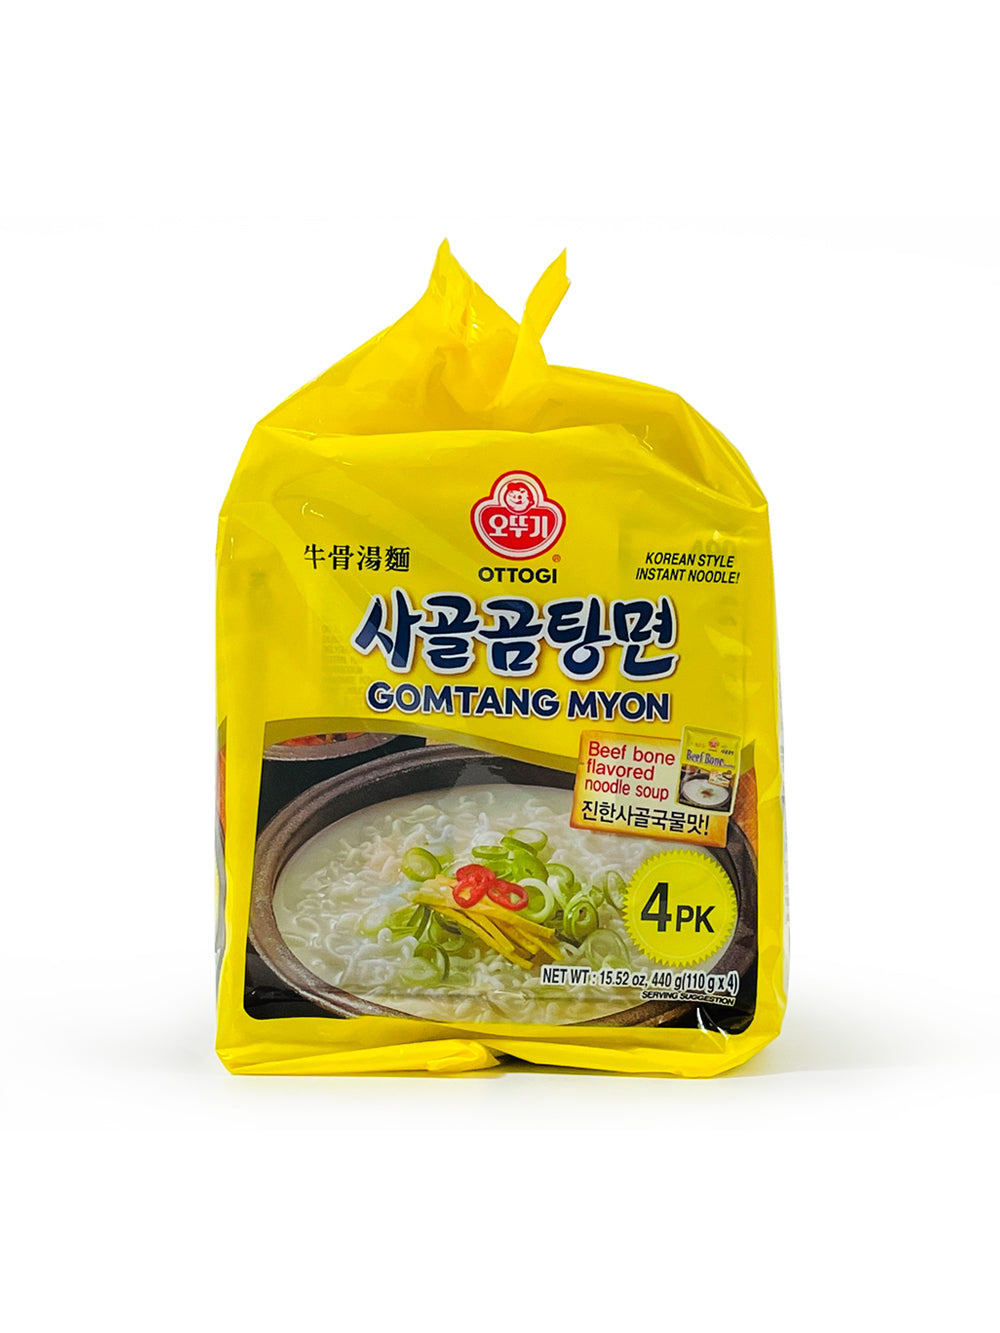 Beef Bone Flavored Noodle Soup [Gomtang Myon] 4PK